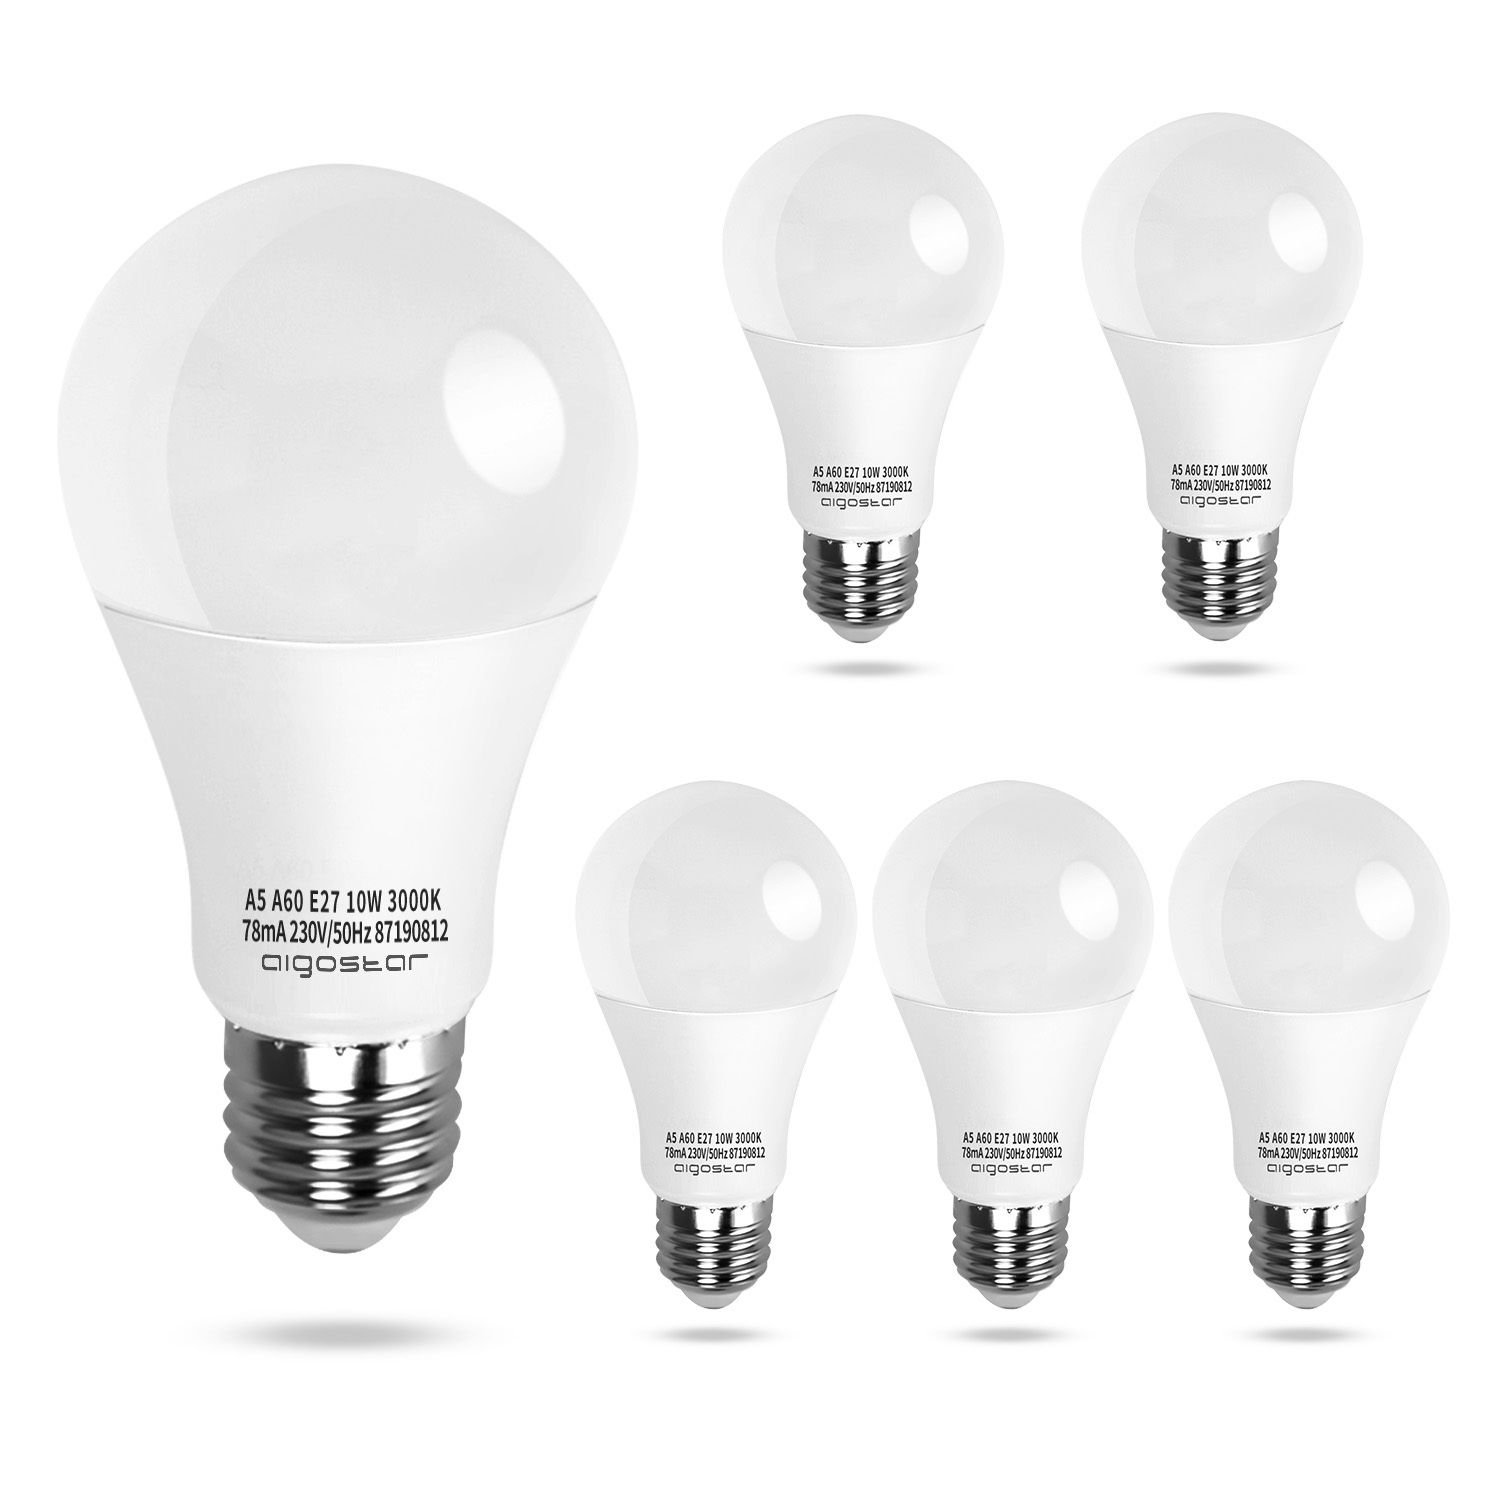 Aigostar LED lamp A5 A60 10W - E27 Fitting - Warm Wit licht 3000K - 800 lumen - Set van 5 stuks.